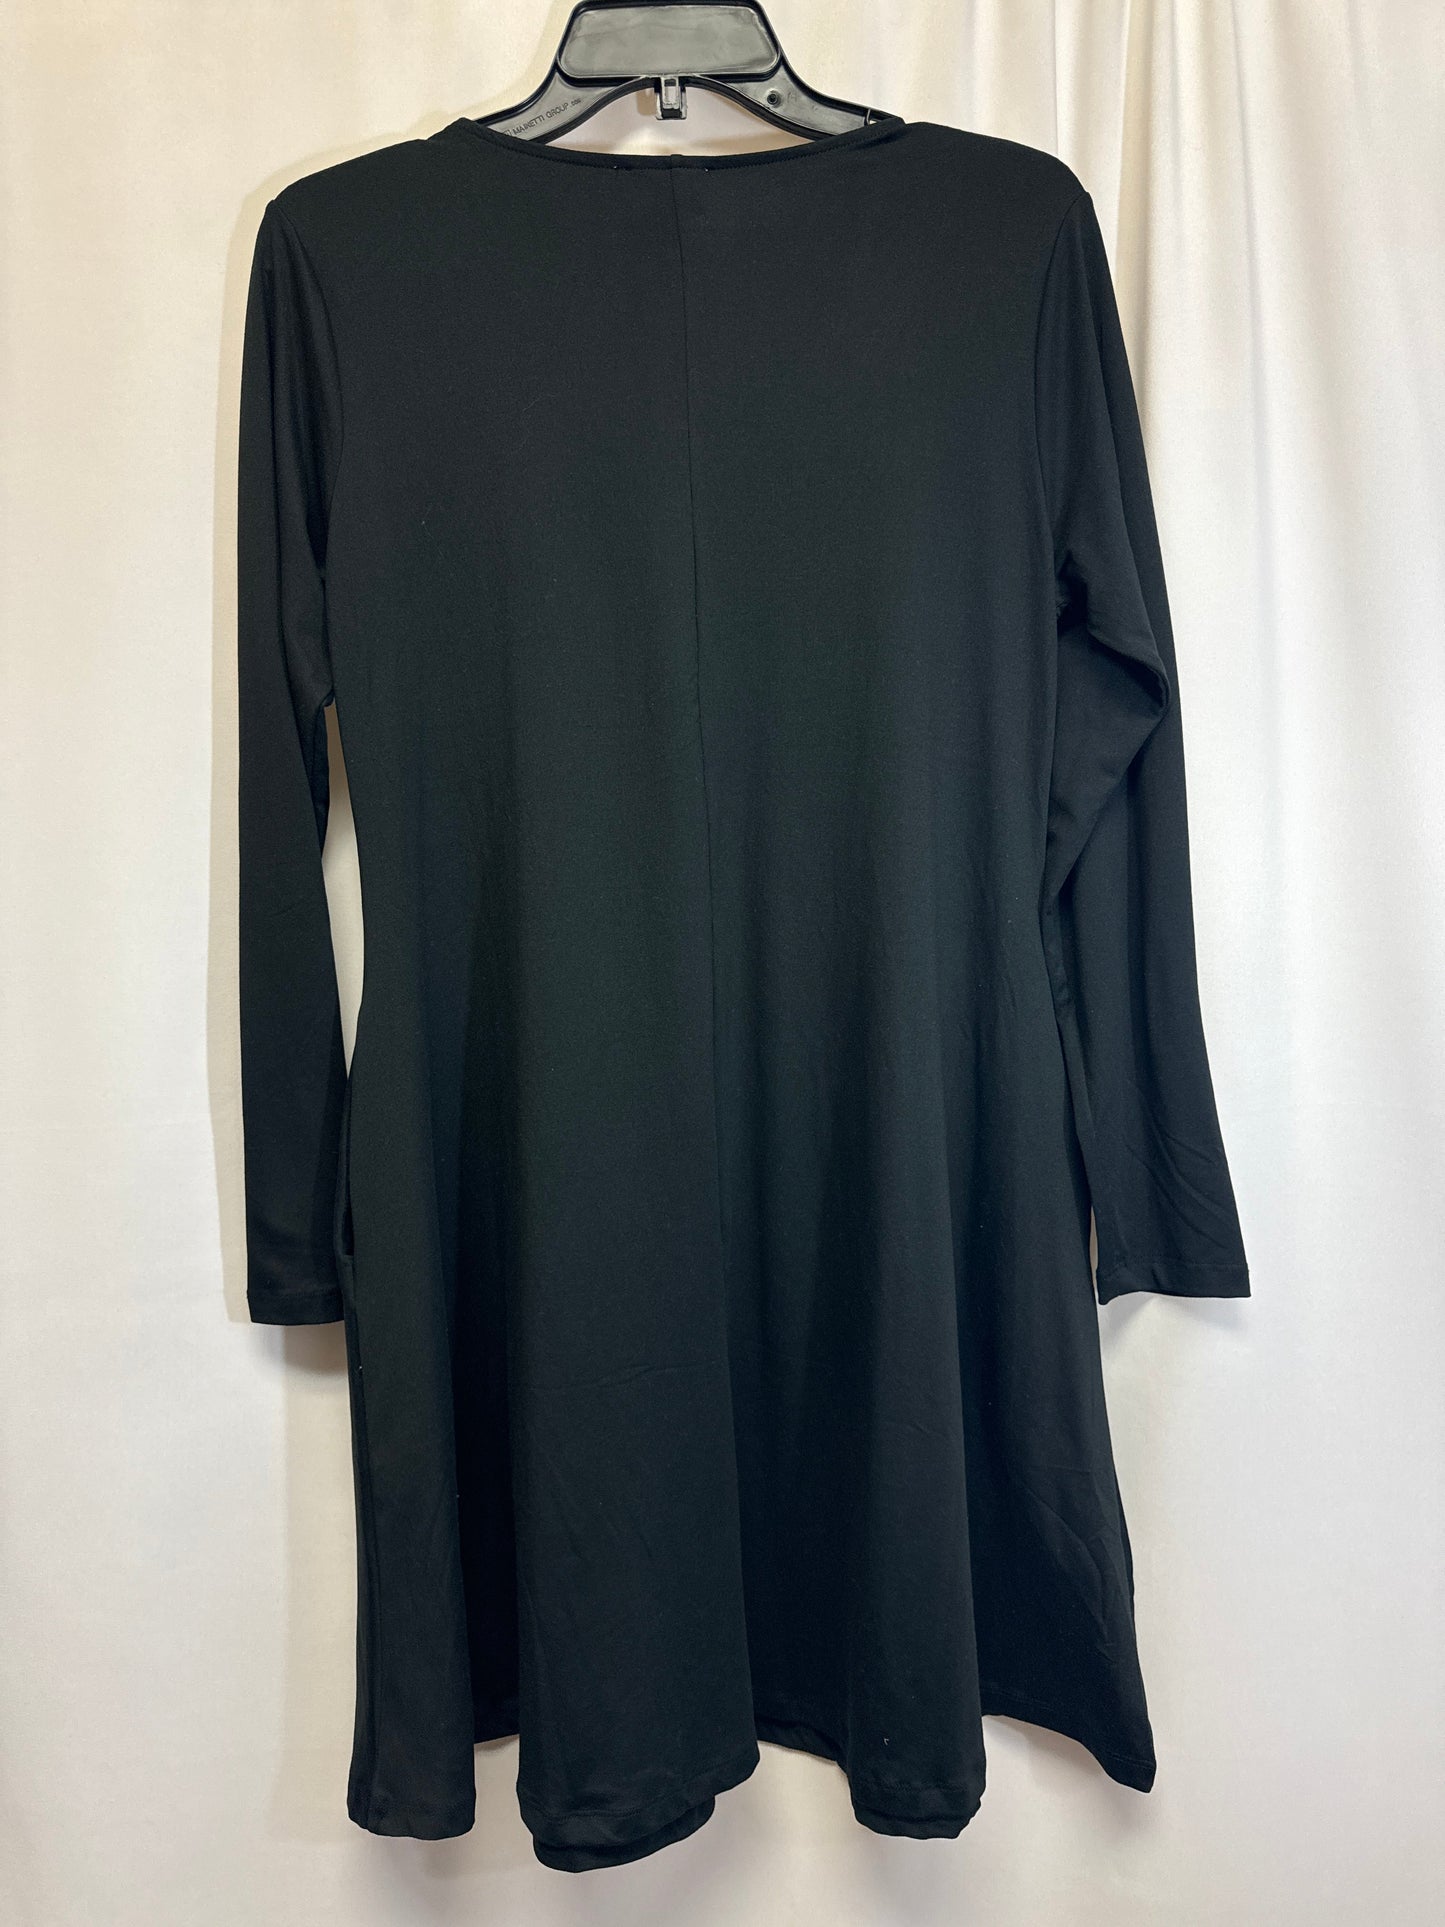 Black Dress Casual Midi Yelete, Size S